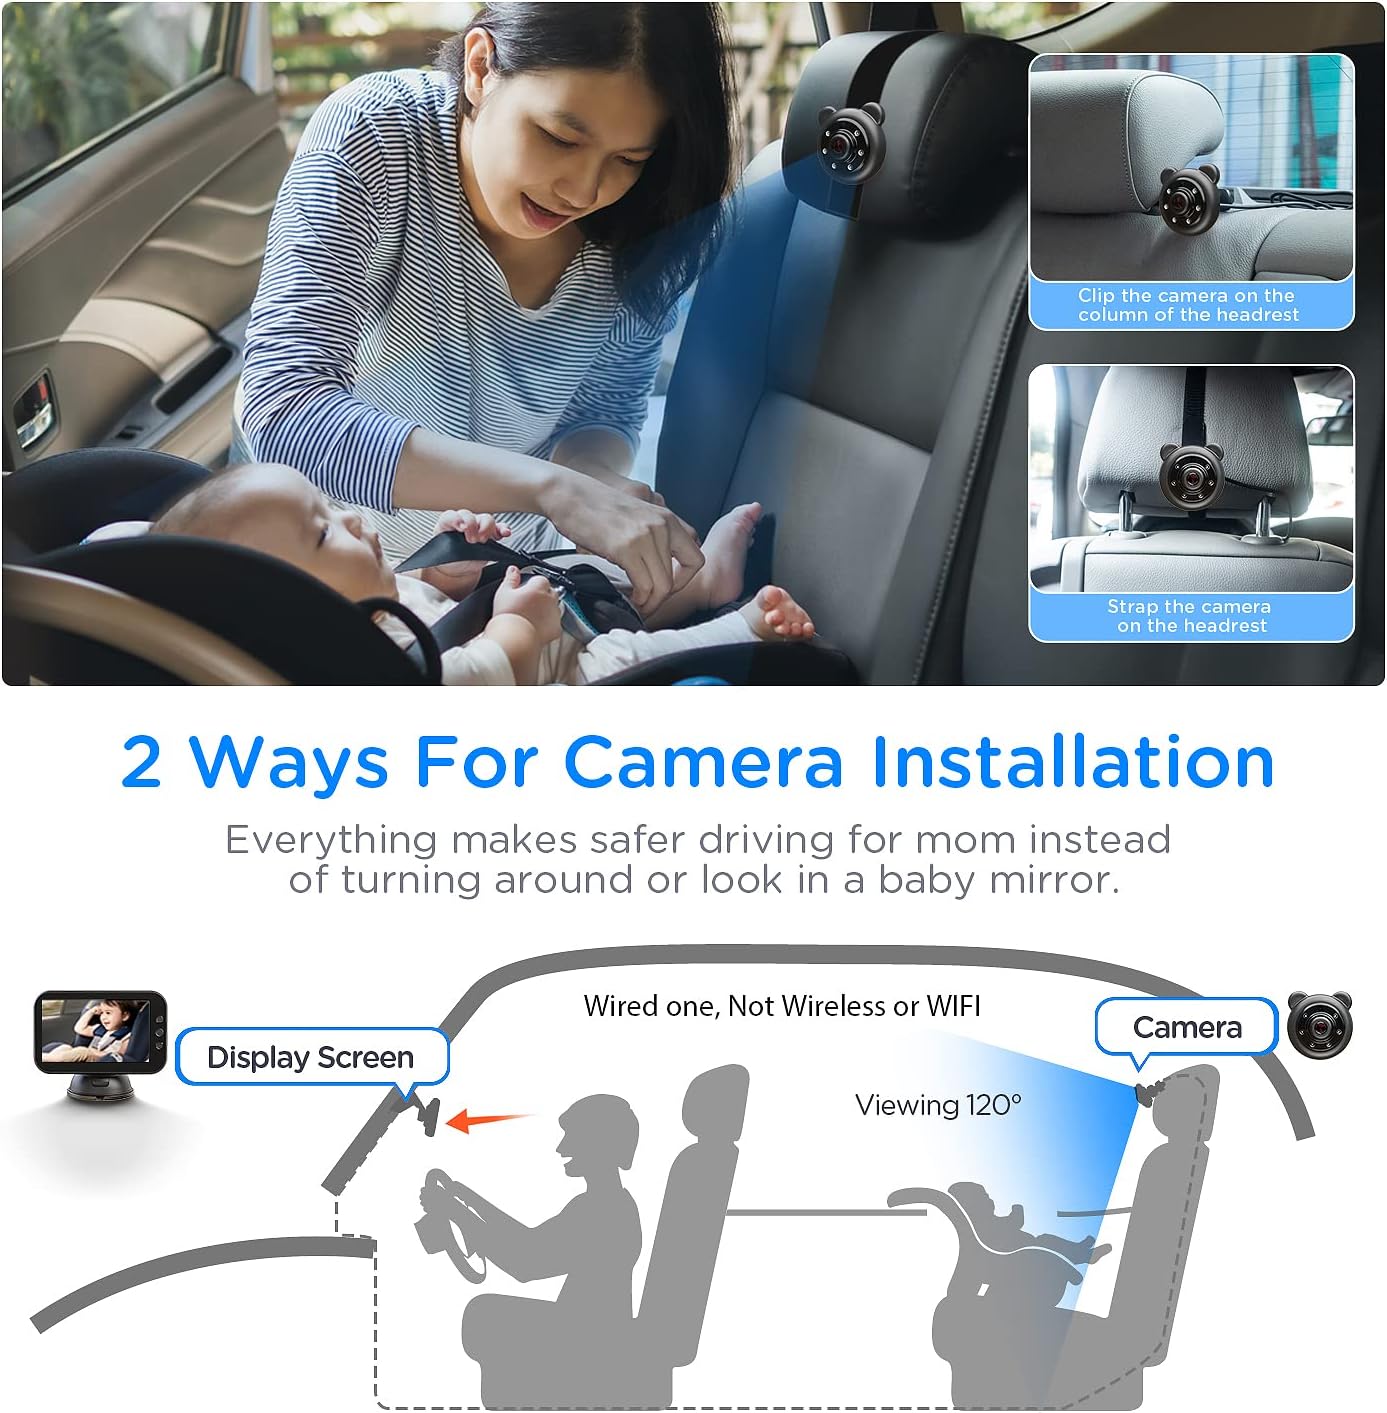 Car Seat Baby Monitor - Black